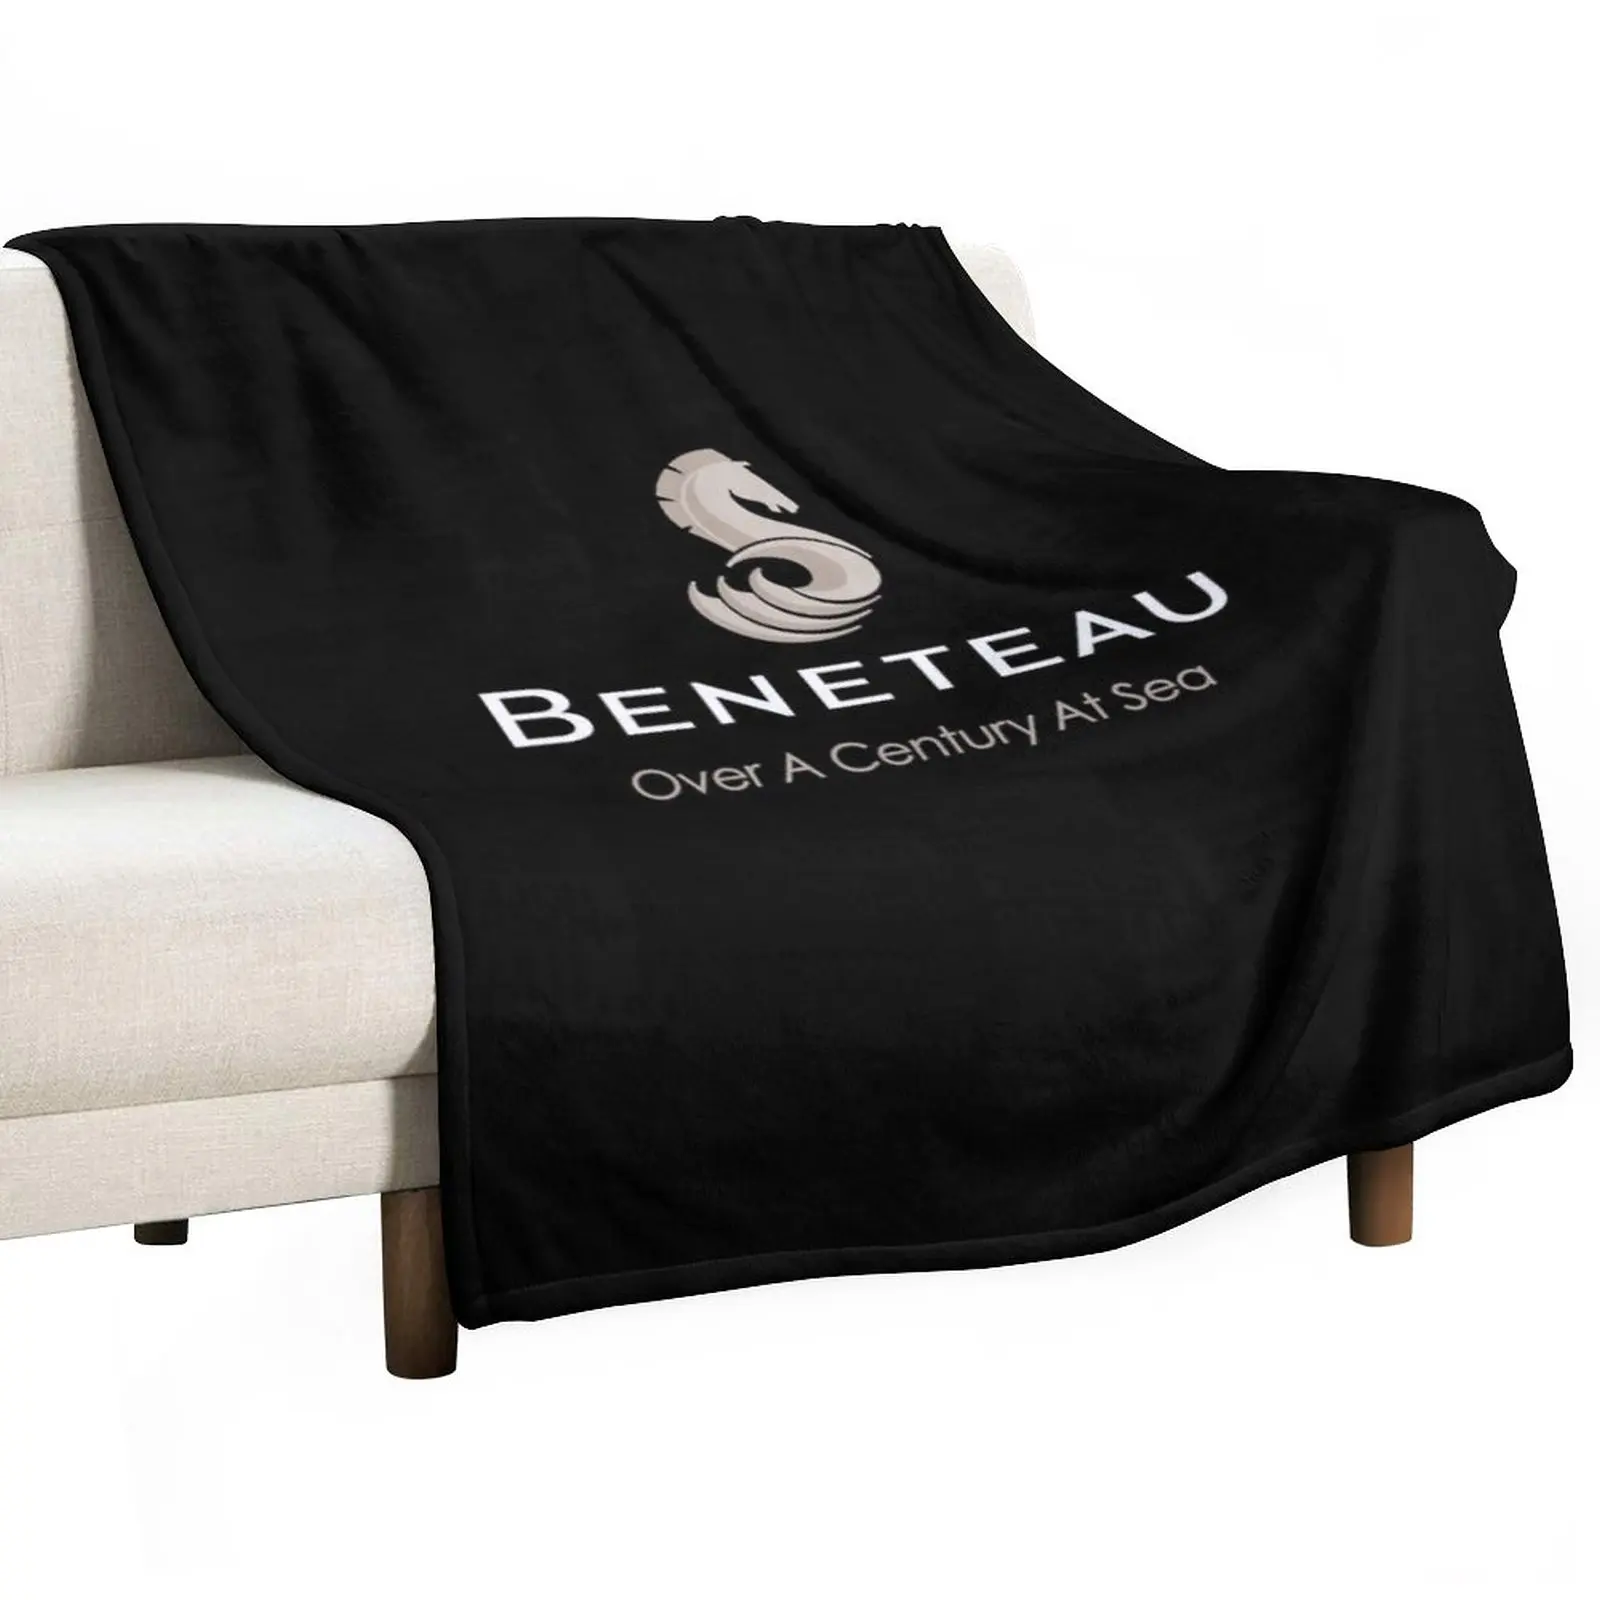 

Beneteau Sailboat Logo Throw Blanket Shaggy Blanket Multi-Purpose Fashion Sofa Blankets Luxury Designer Blanket